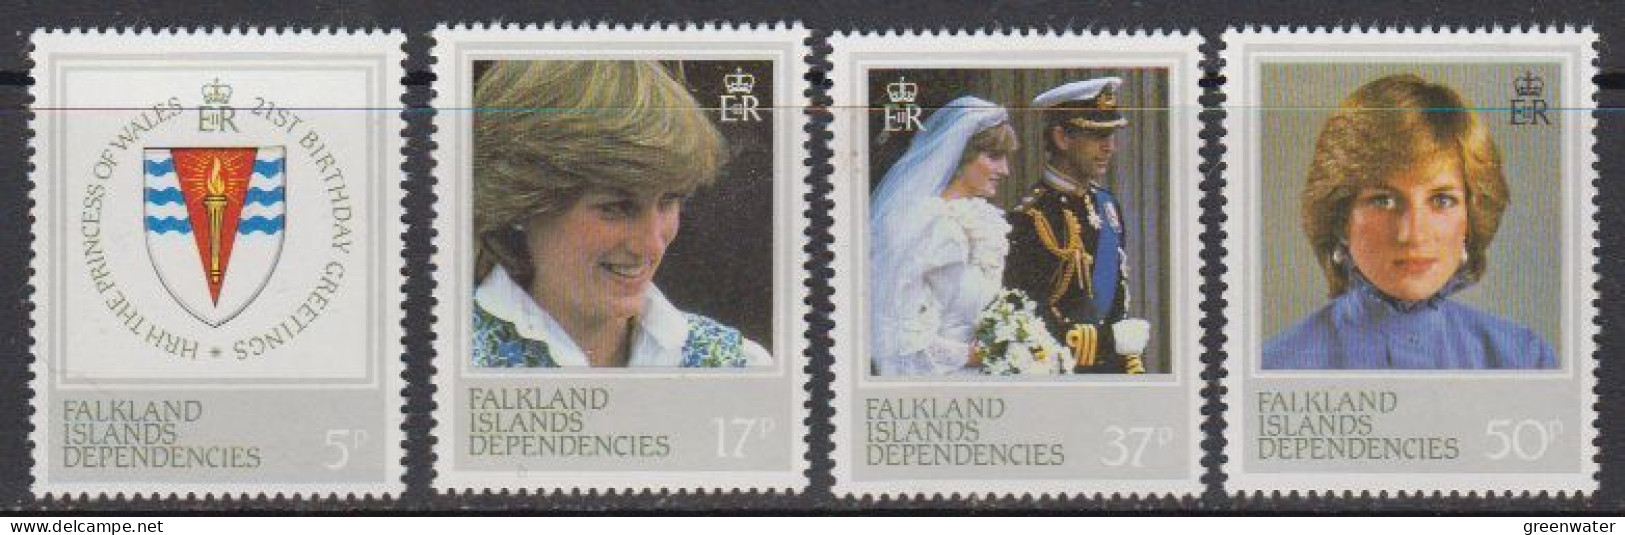 Falkland Islands Dependencies (FID) 1982 21st Birthday Princess Of Wales 4v ** Mnh (59842B) - Südgeorgien